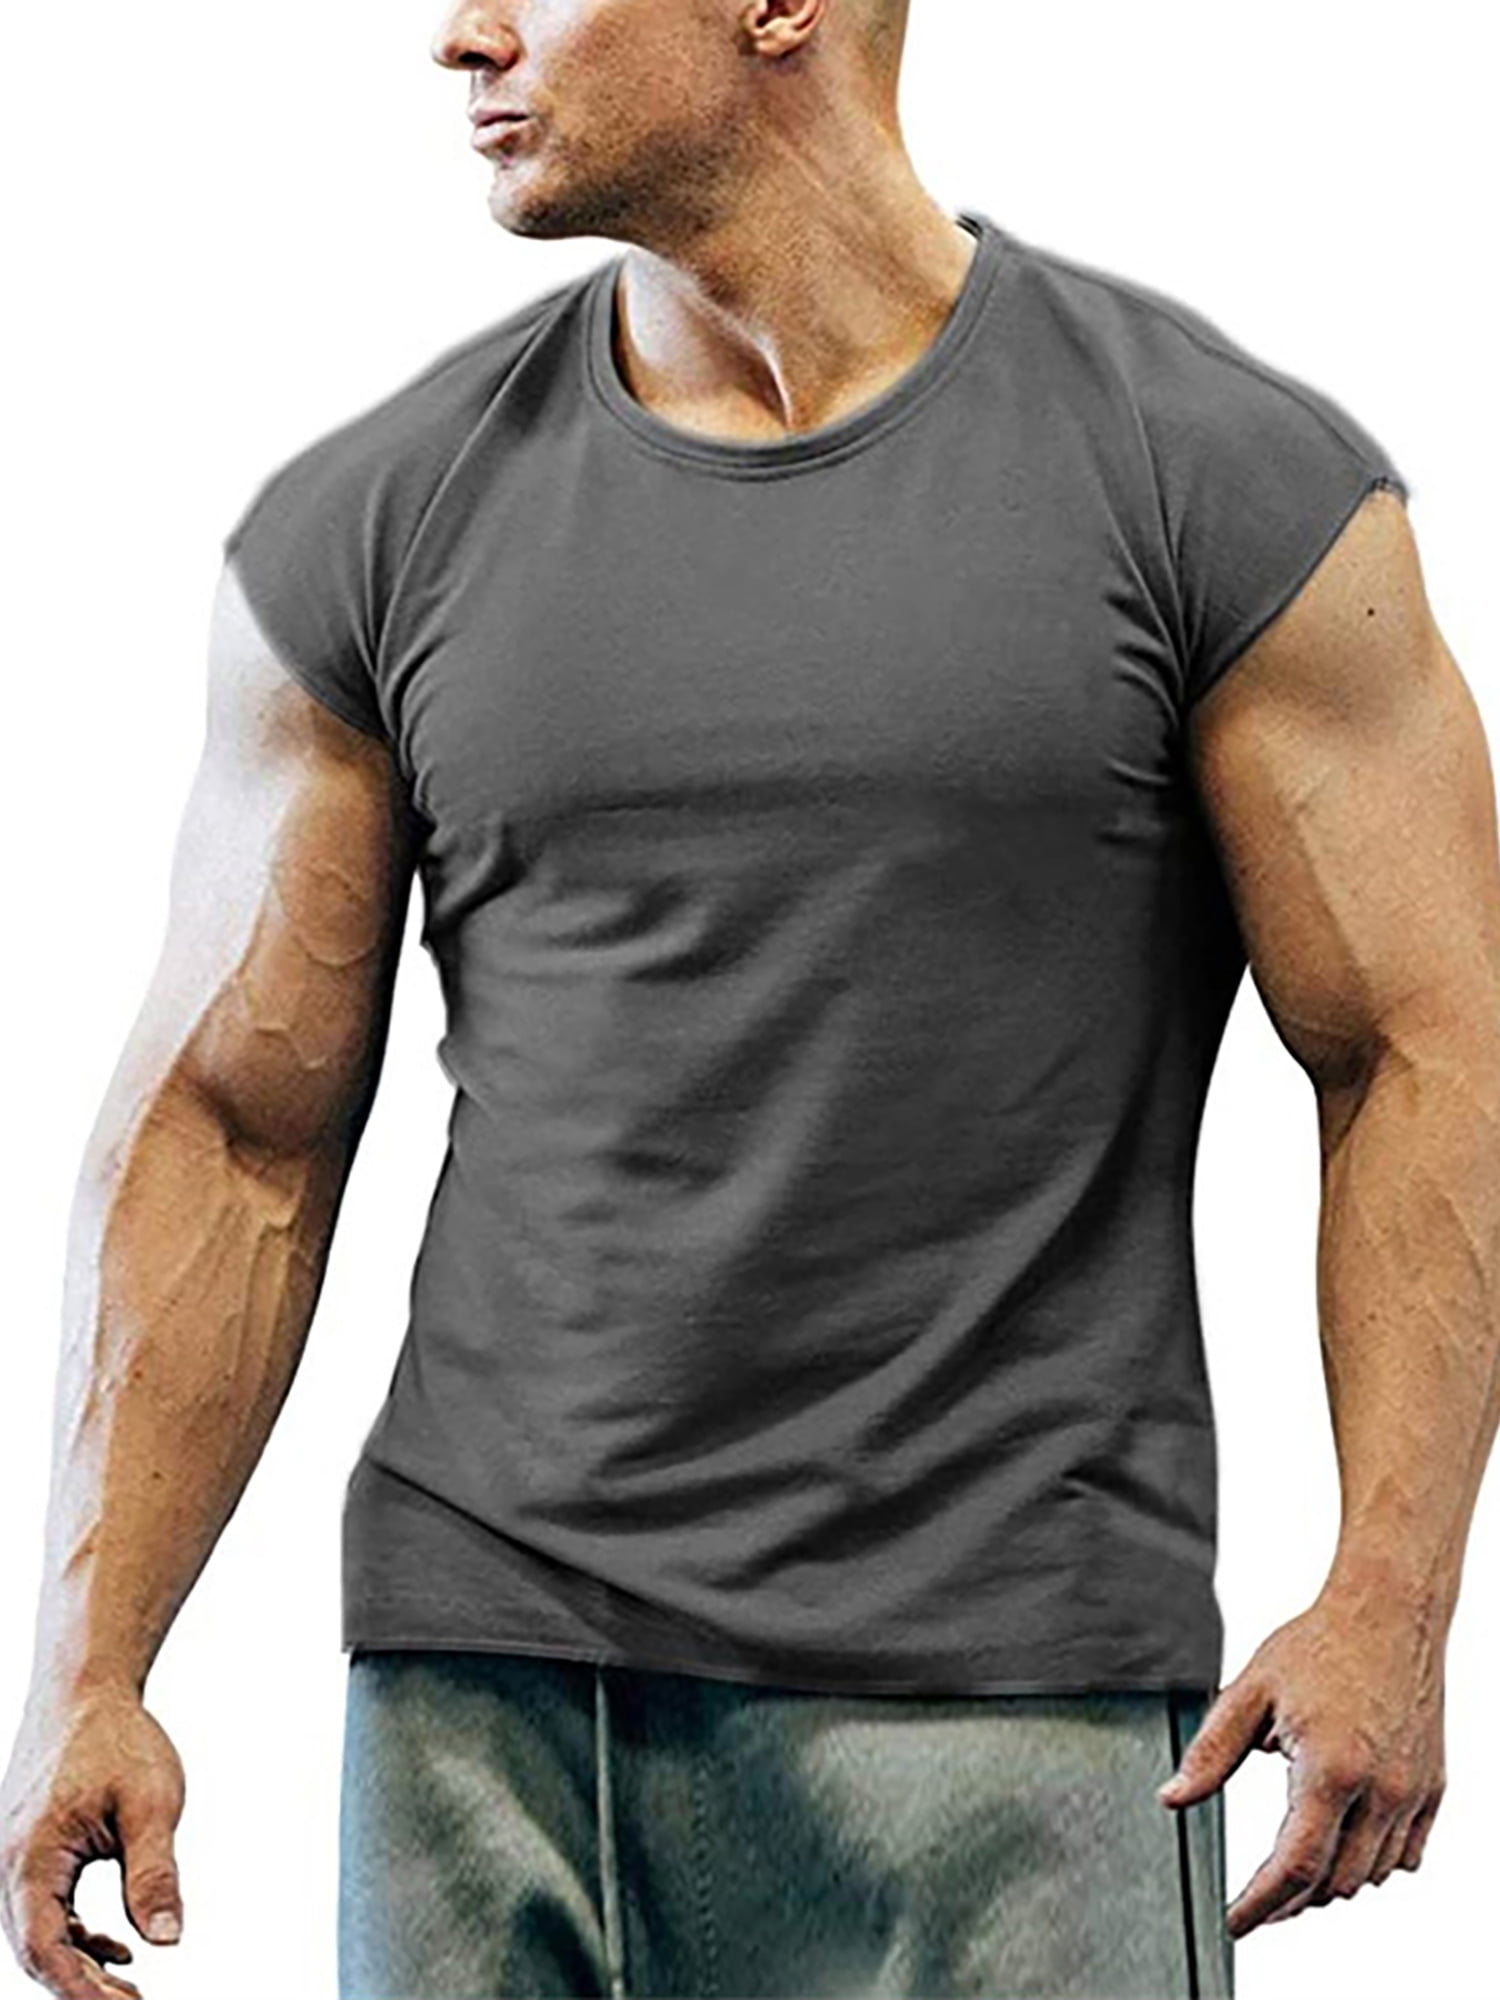 Men Compression Base Layer Shirt Tights Short Sleeve Sportswear T-Shirt Tops 